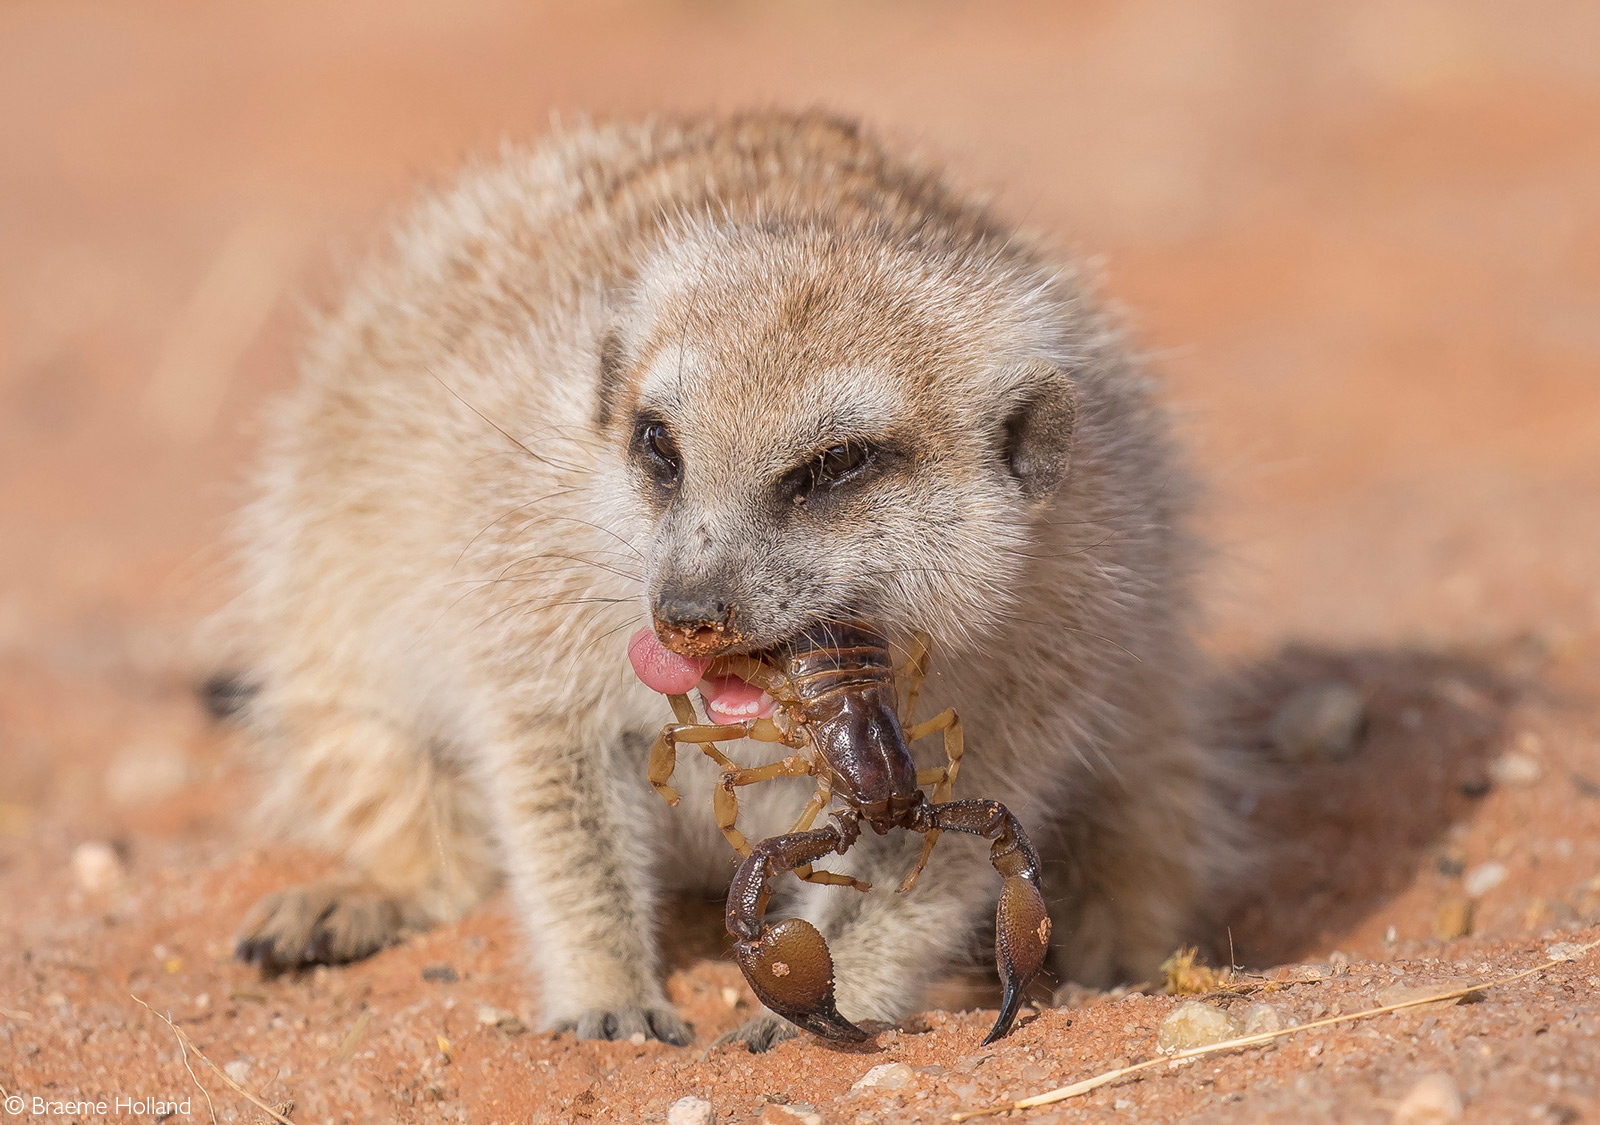 A meerkat enjoys a scorpion as a meal. Kgalagadi Transfrontier Park, South Africa © Braeme Holland